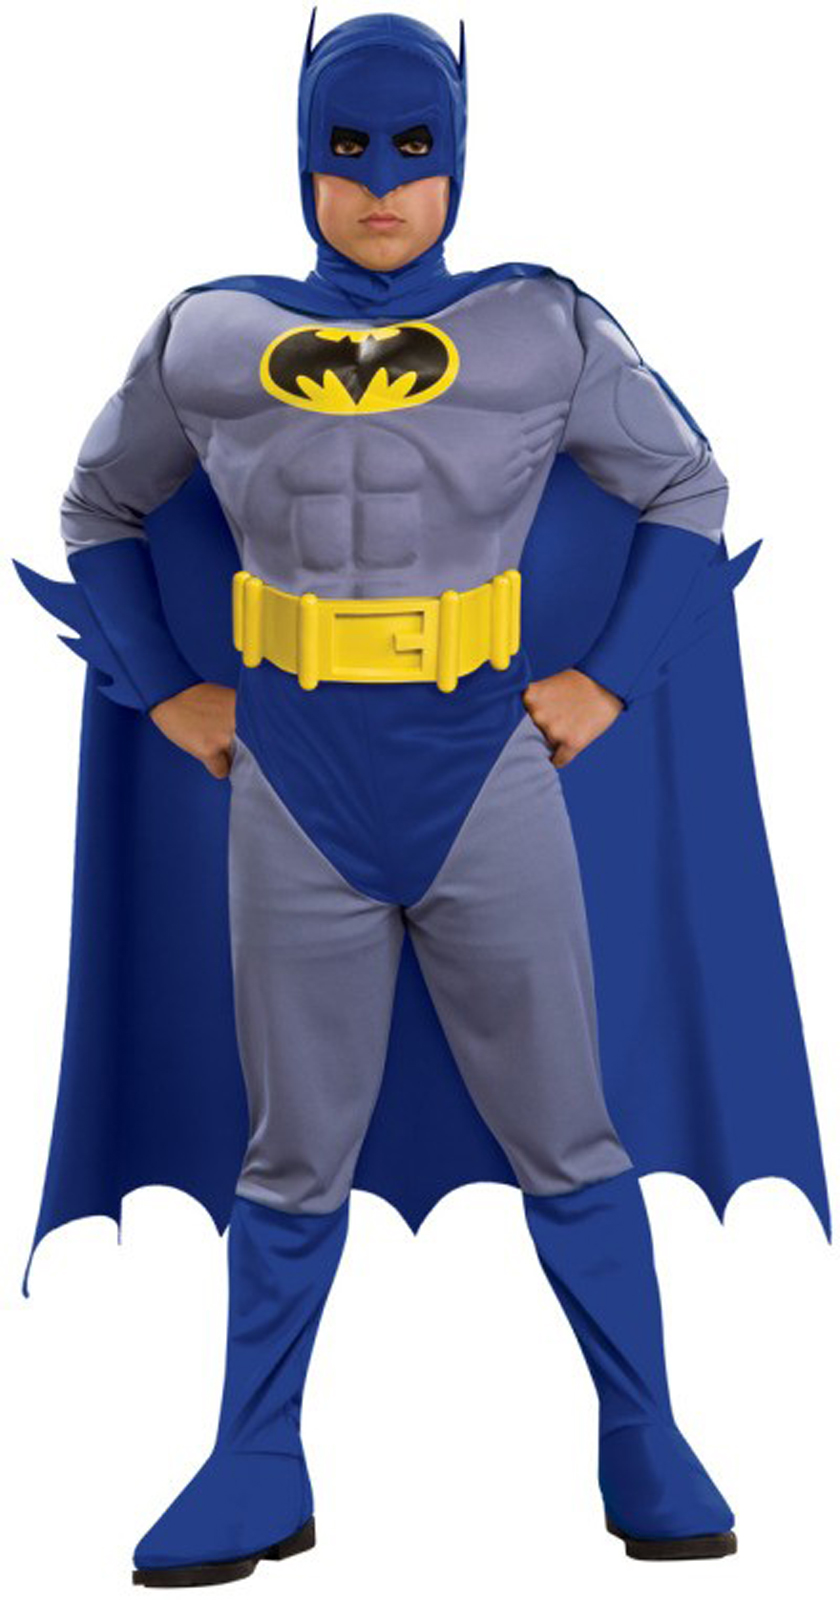 Batman Brave & Bold Deluxe Toddler / Child Costume